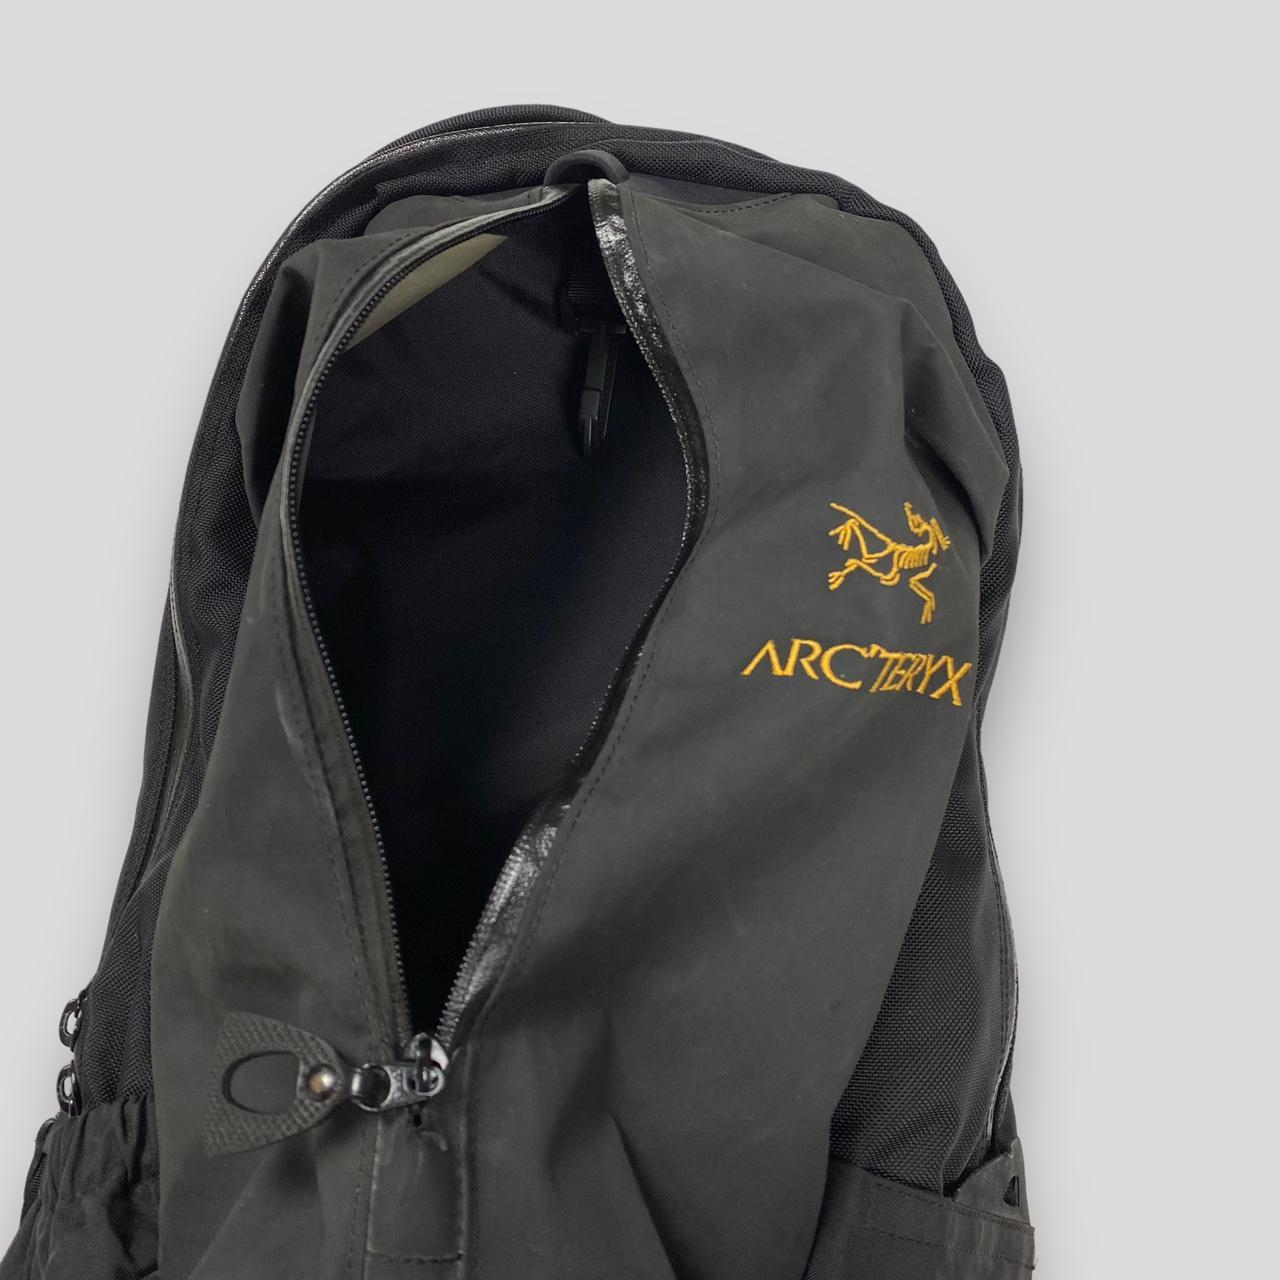 Arcteryx bag - Depop